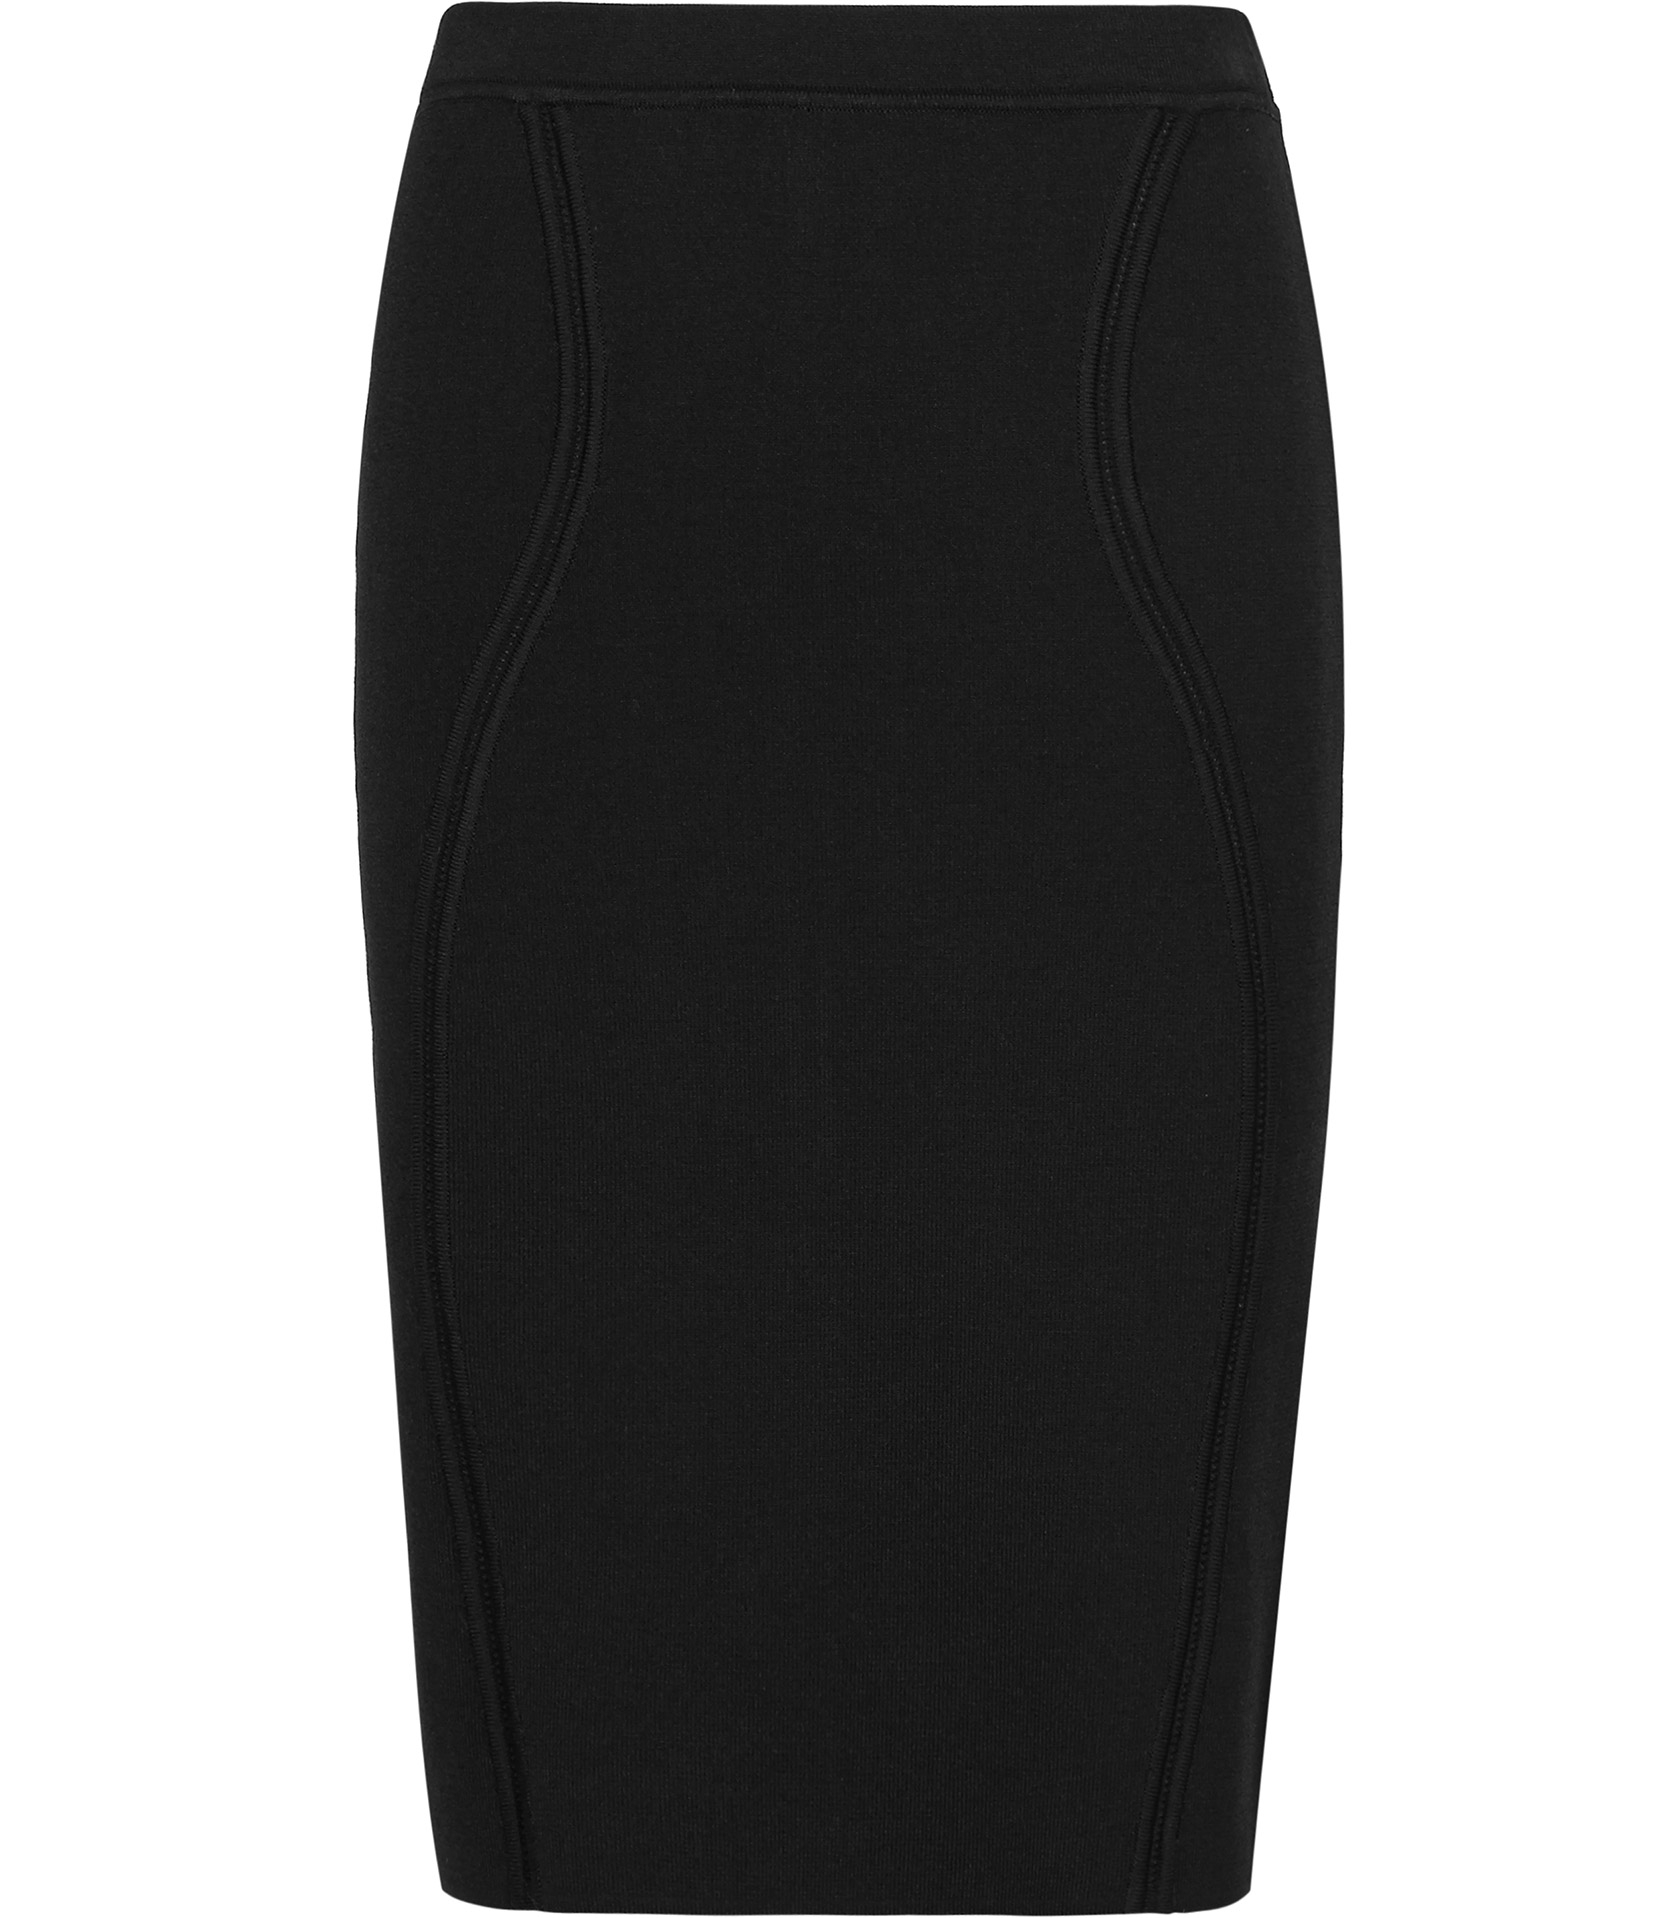 Lyst - Reiss Sella Formal Pencil Skirt in Black